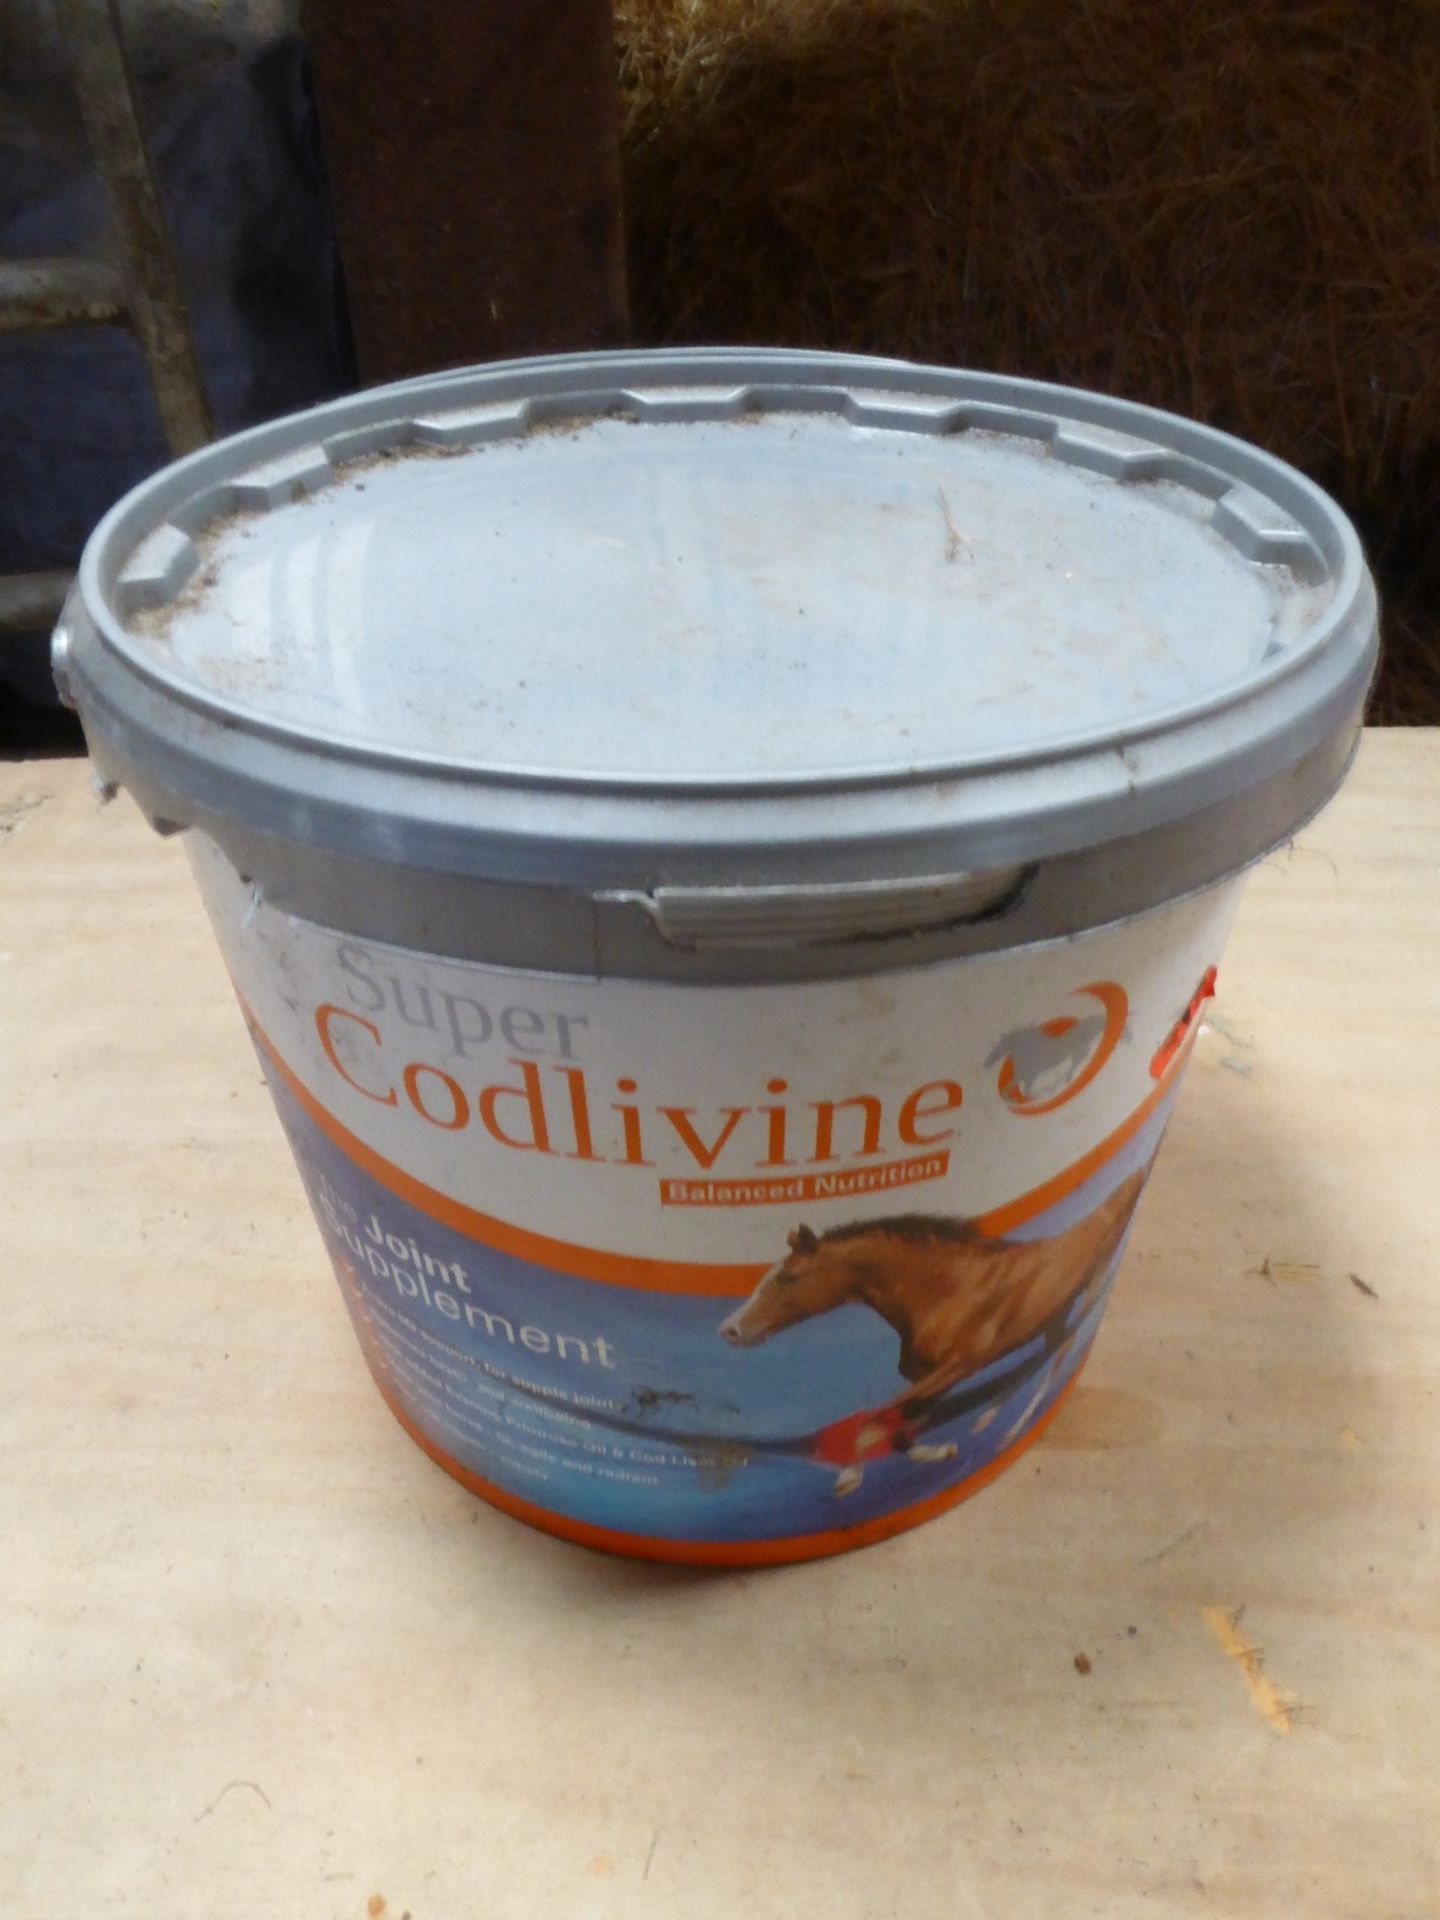 Bucket of Super Codlivine food supplement, 2.5kgs - Image 2 of 2